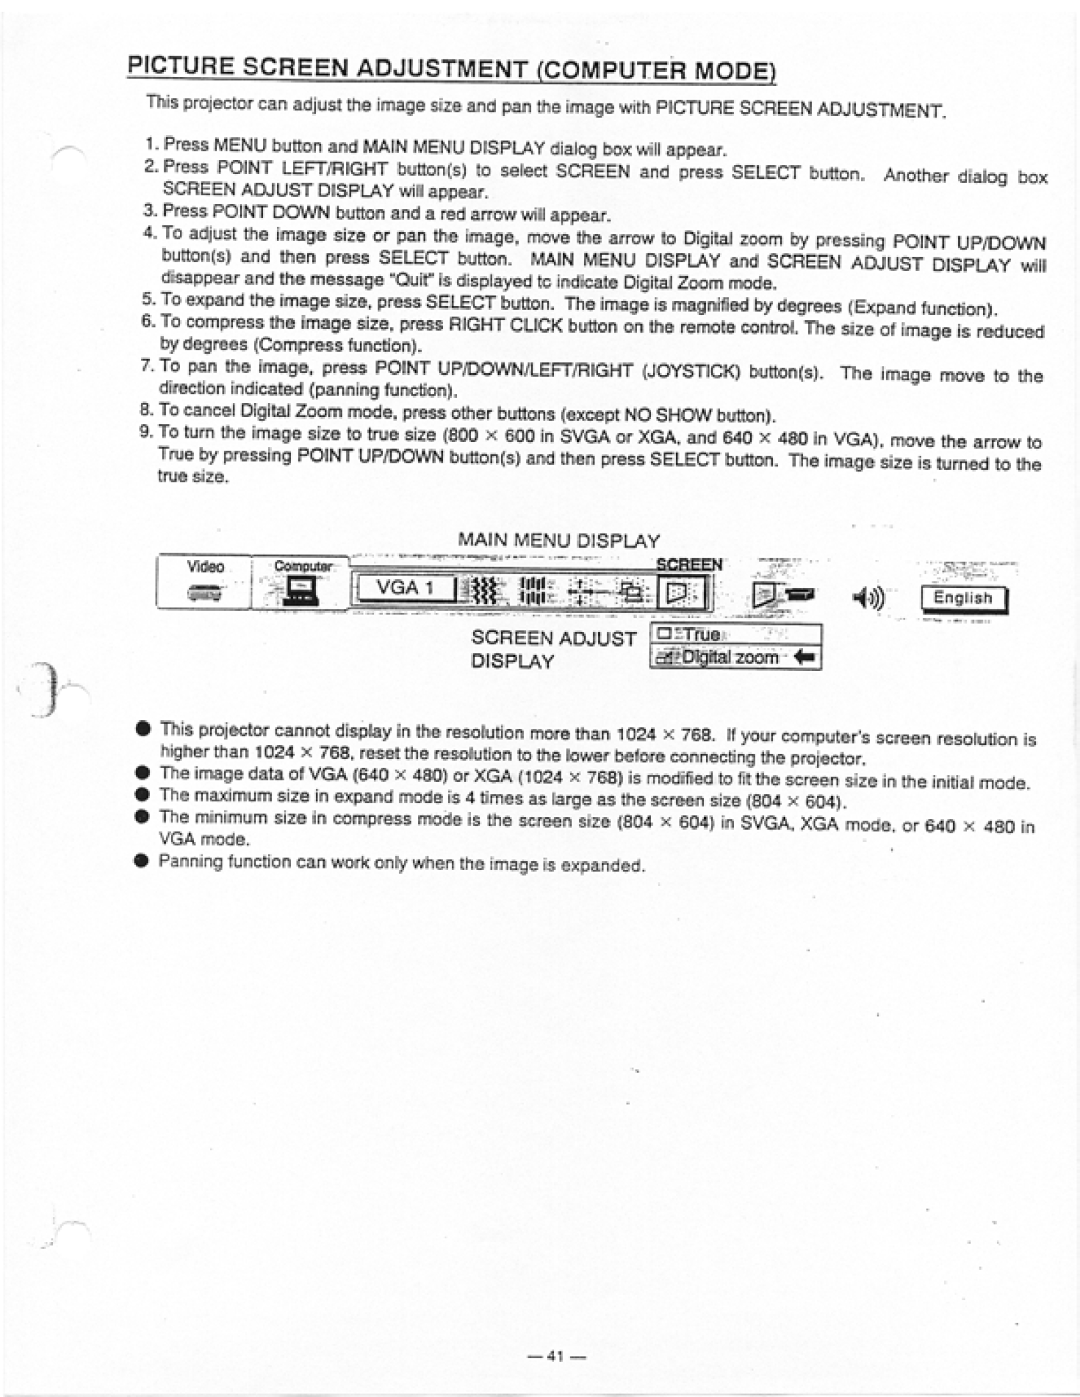 Ask Proxima Ultralight LS1 manual 